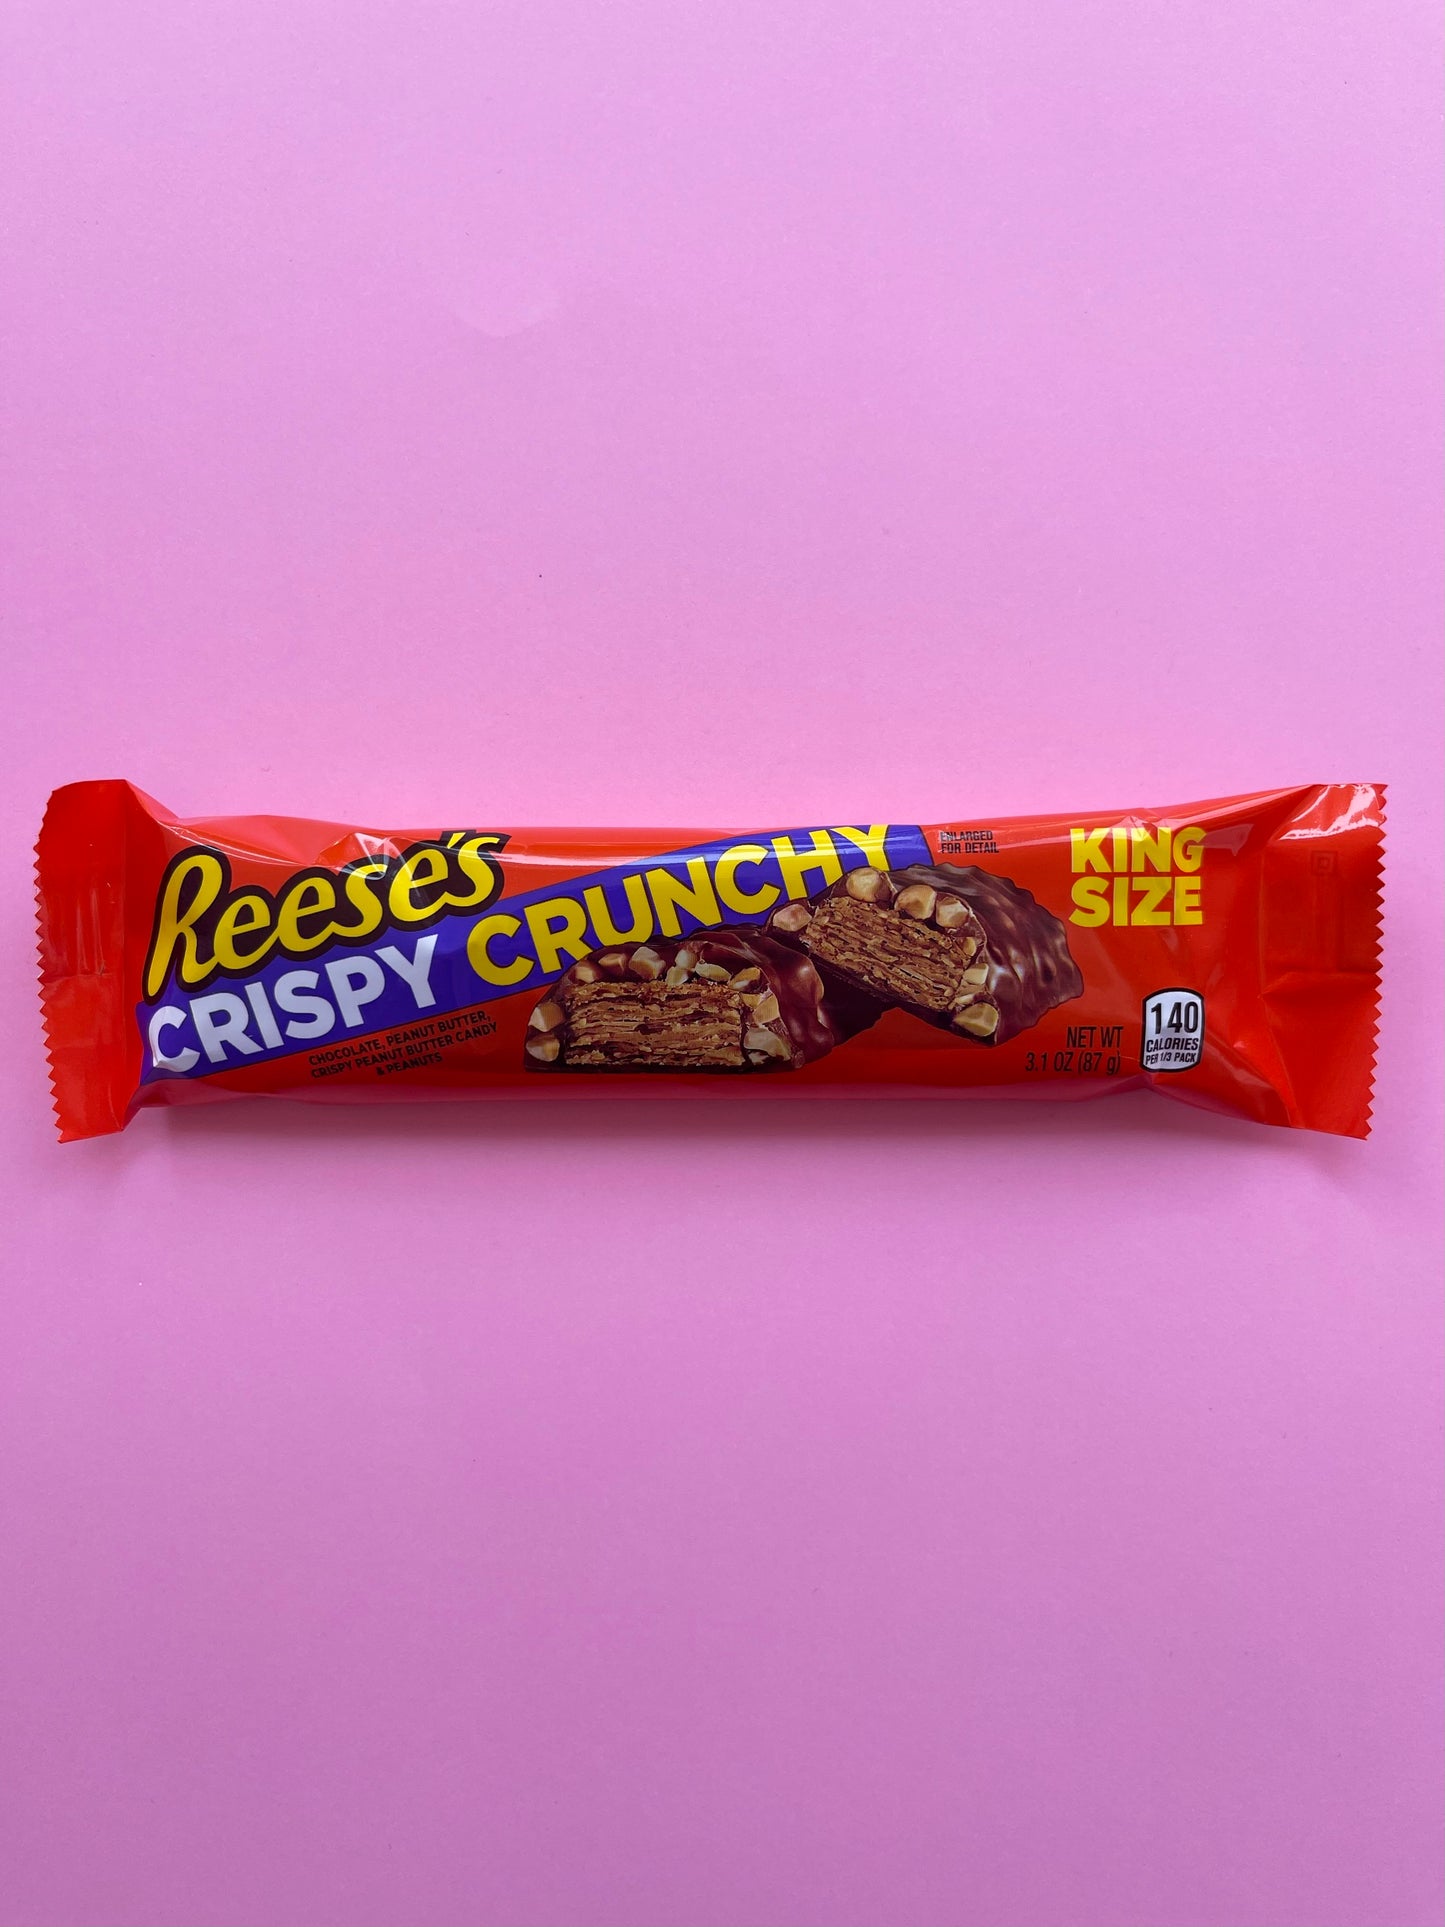 Reese’s Crispy Crunch King Size